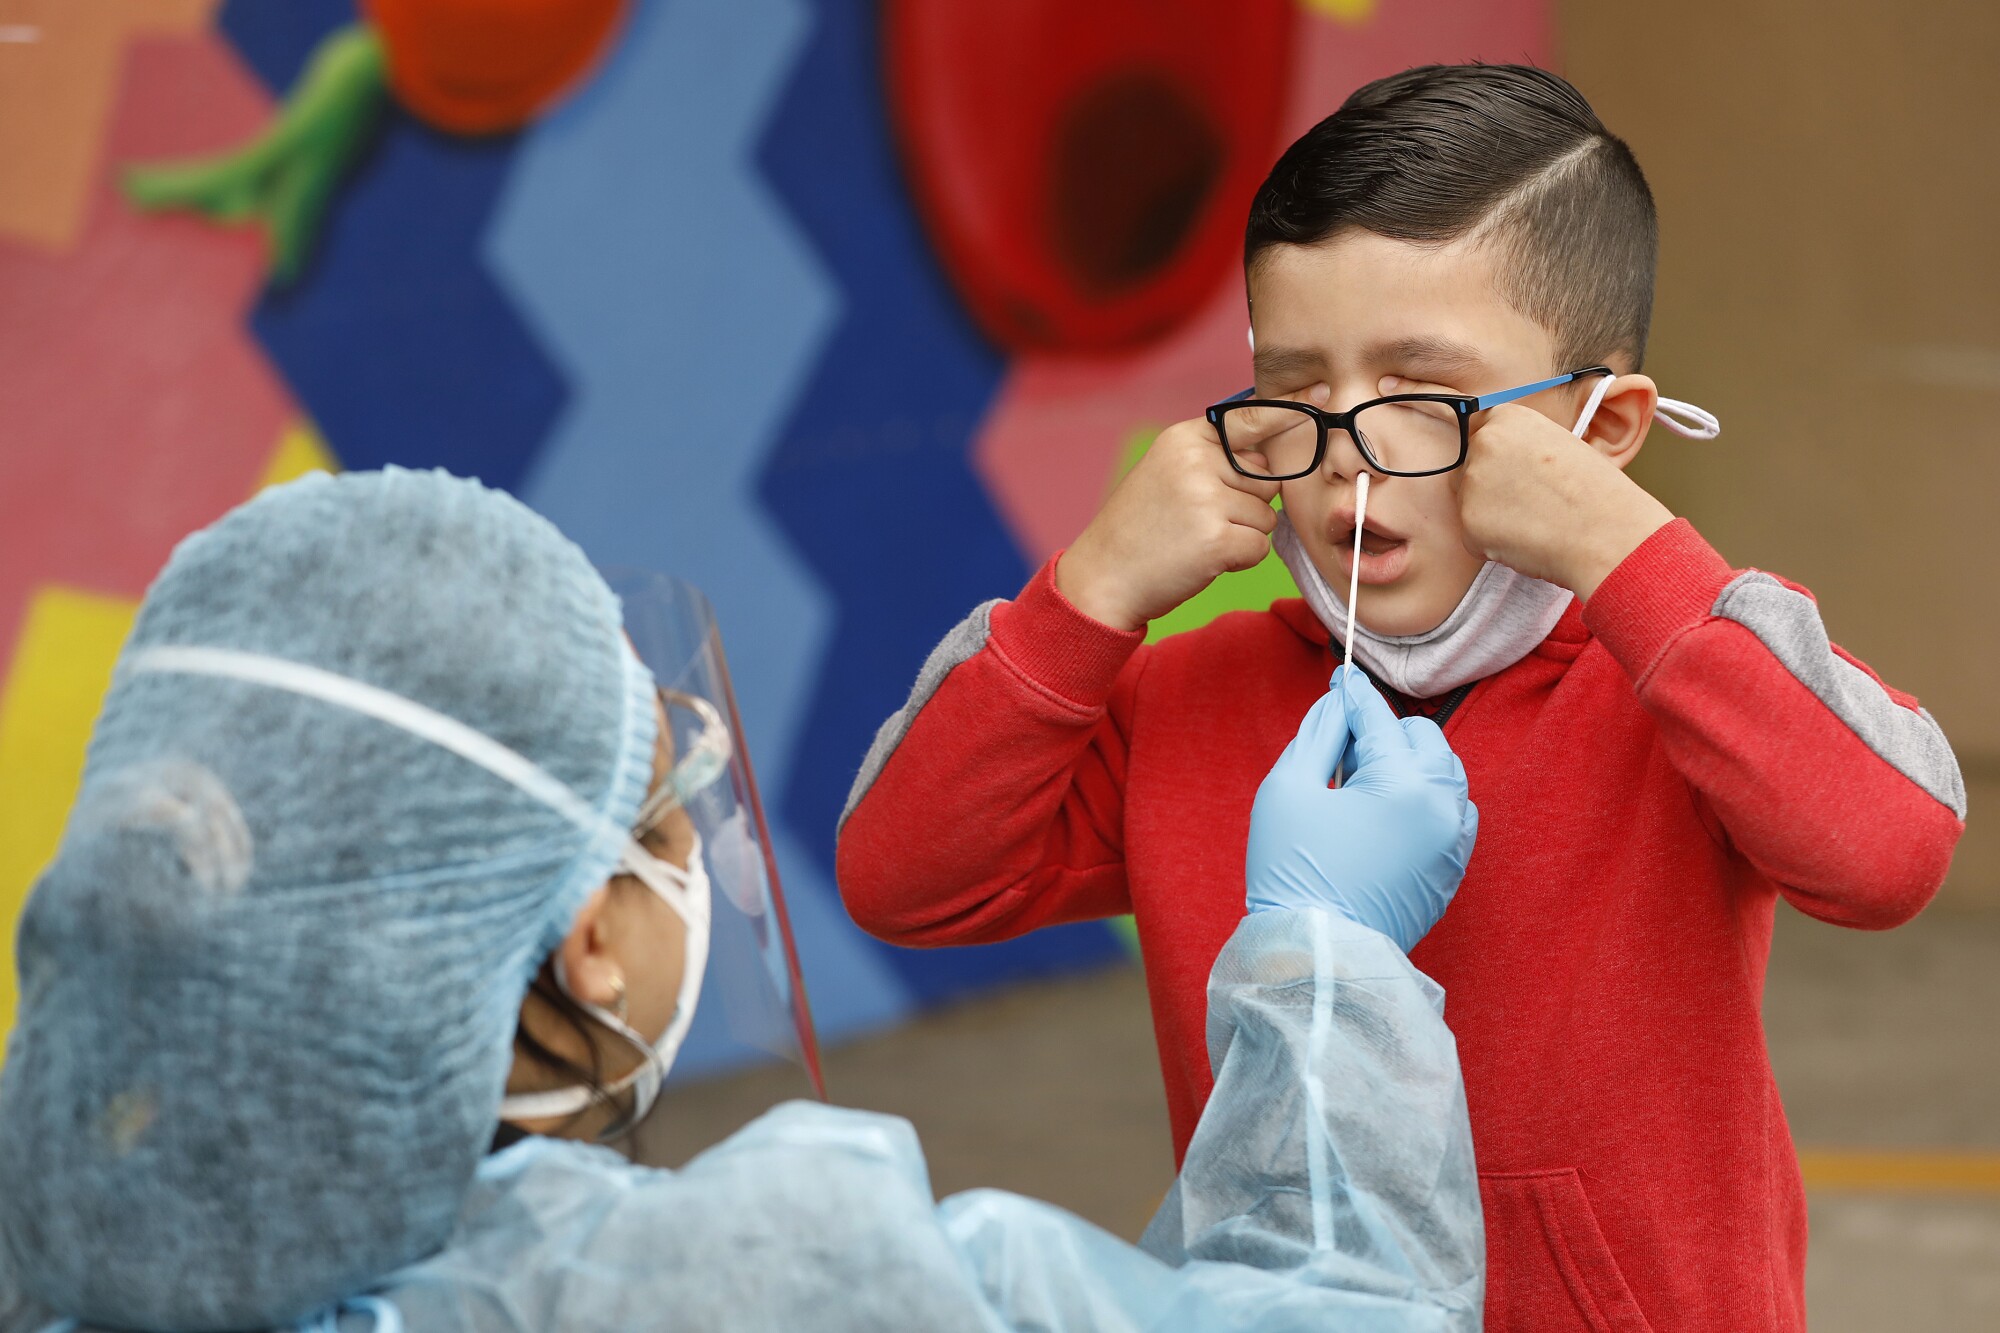 A boy gets a coronavirus test from a nurse at a school